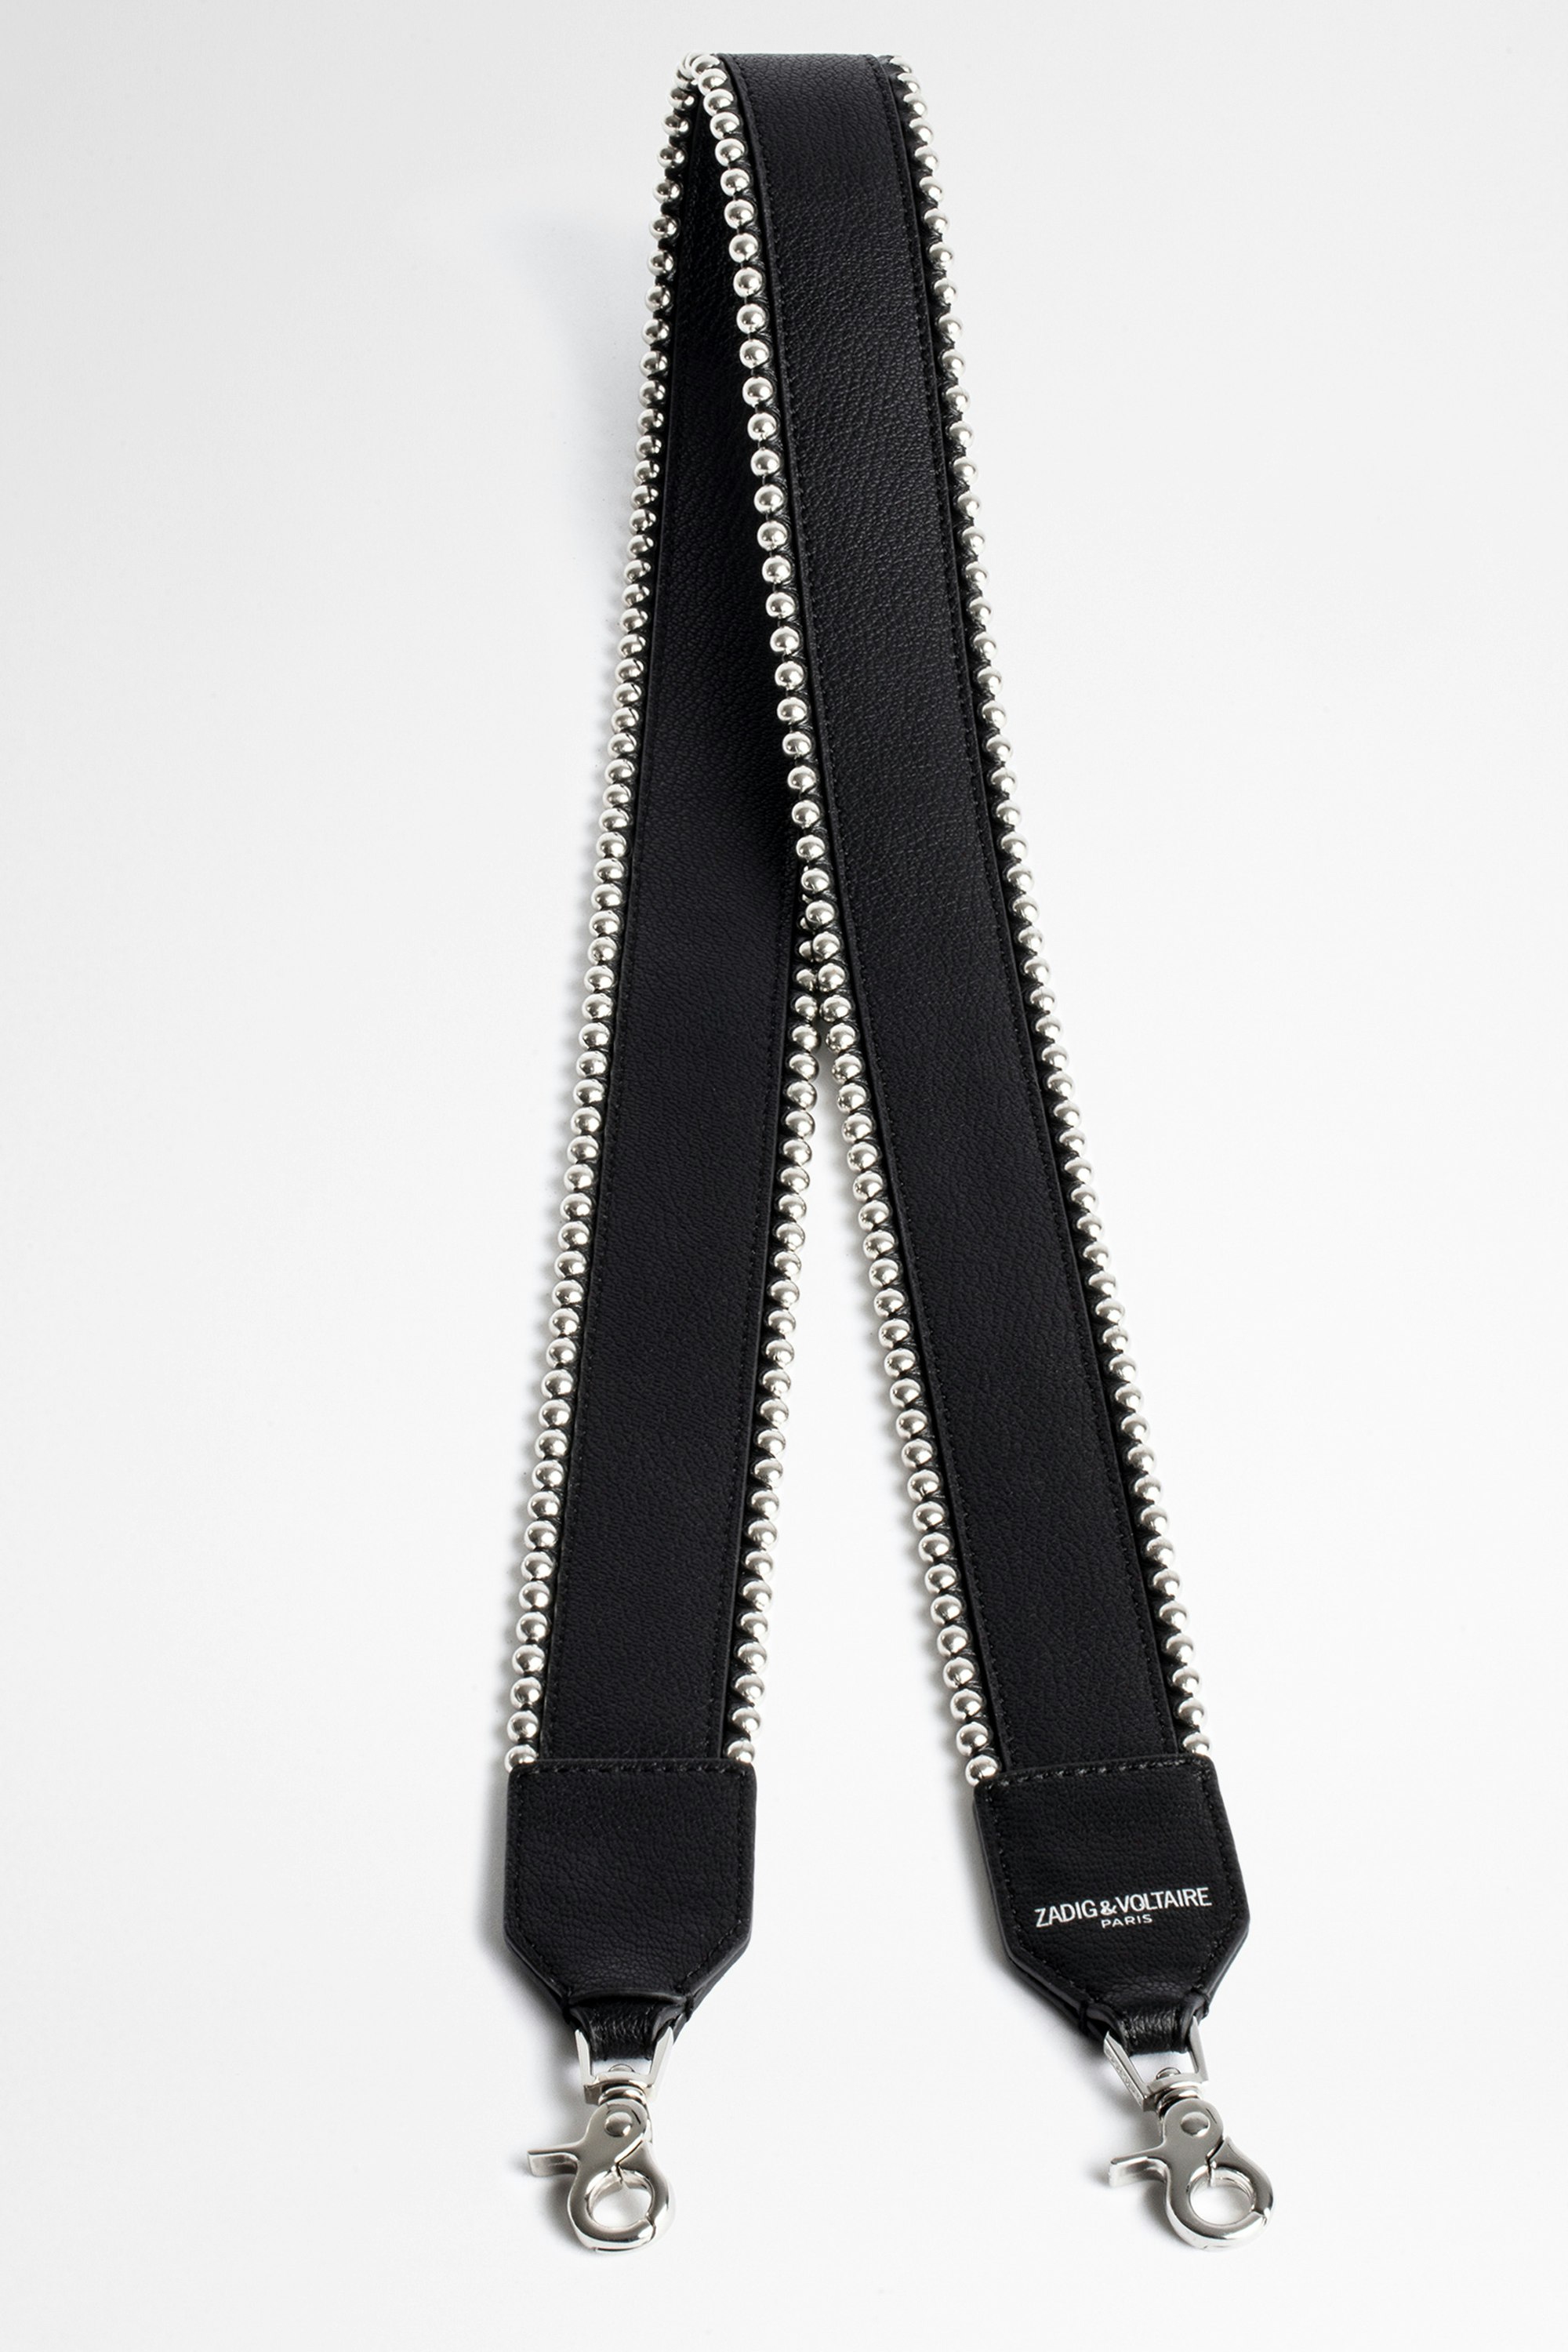 Stud Piping ショルダーストラップ - Black leather shoulder strap